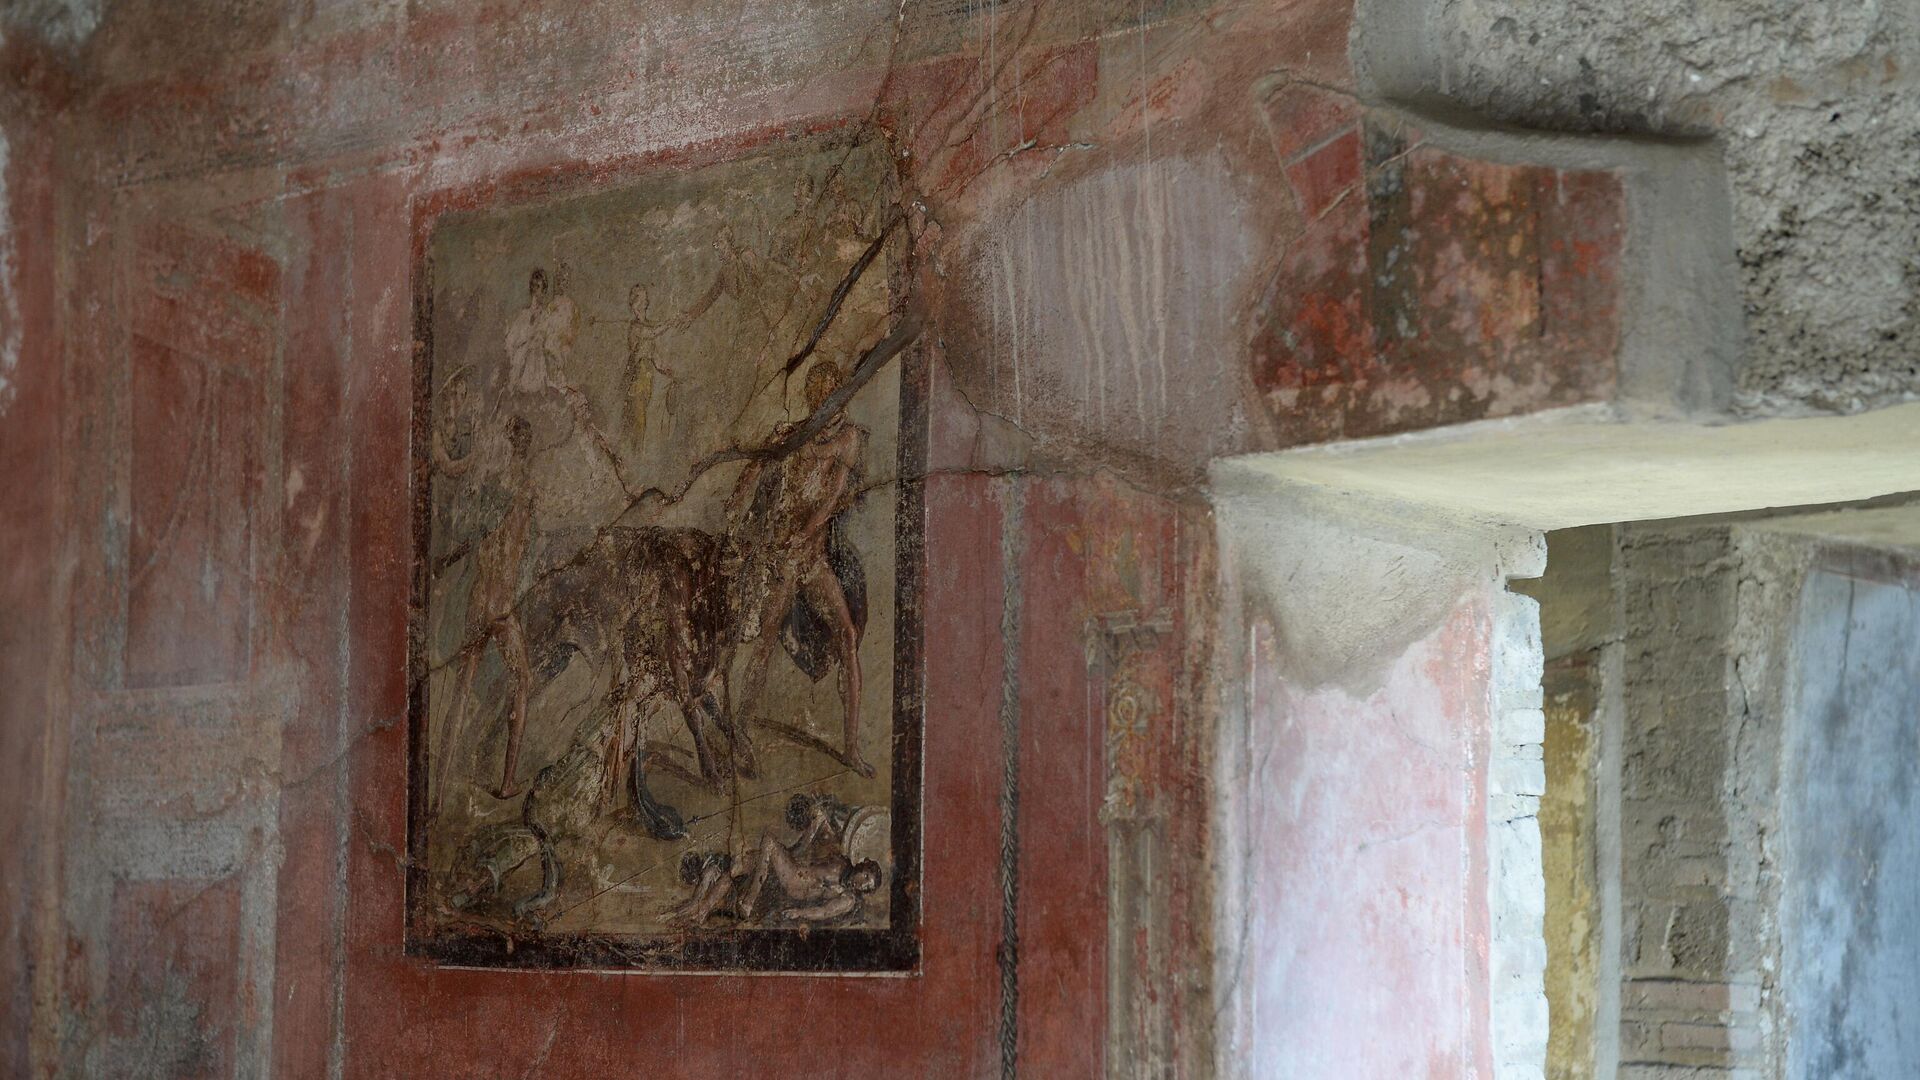 Freska viename iš Pompėjos miesto muziejaus po atviru dangumi namų - Sputnik Lietuva, 1920, 12.09.2021